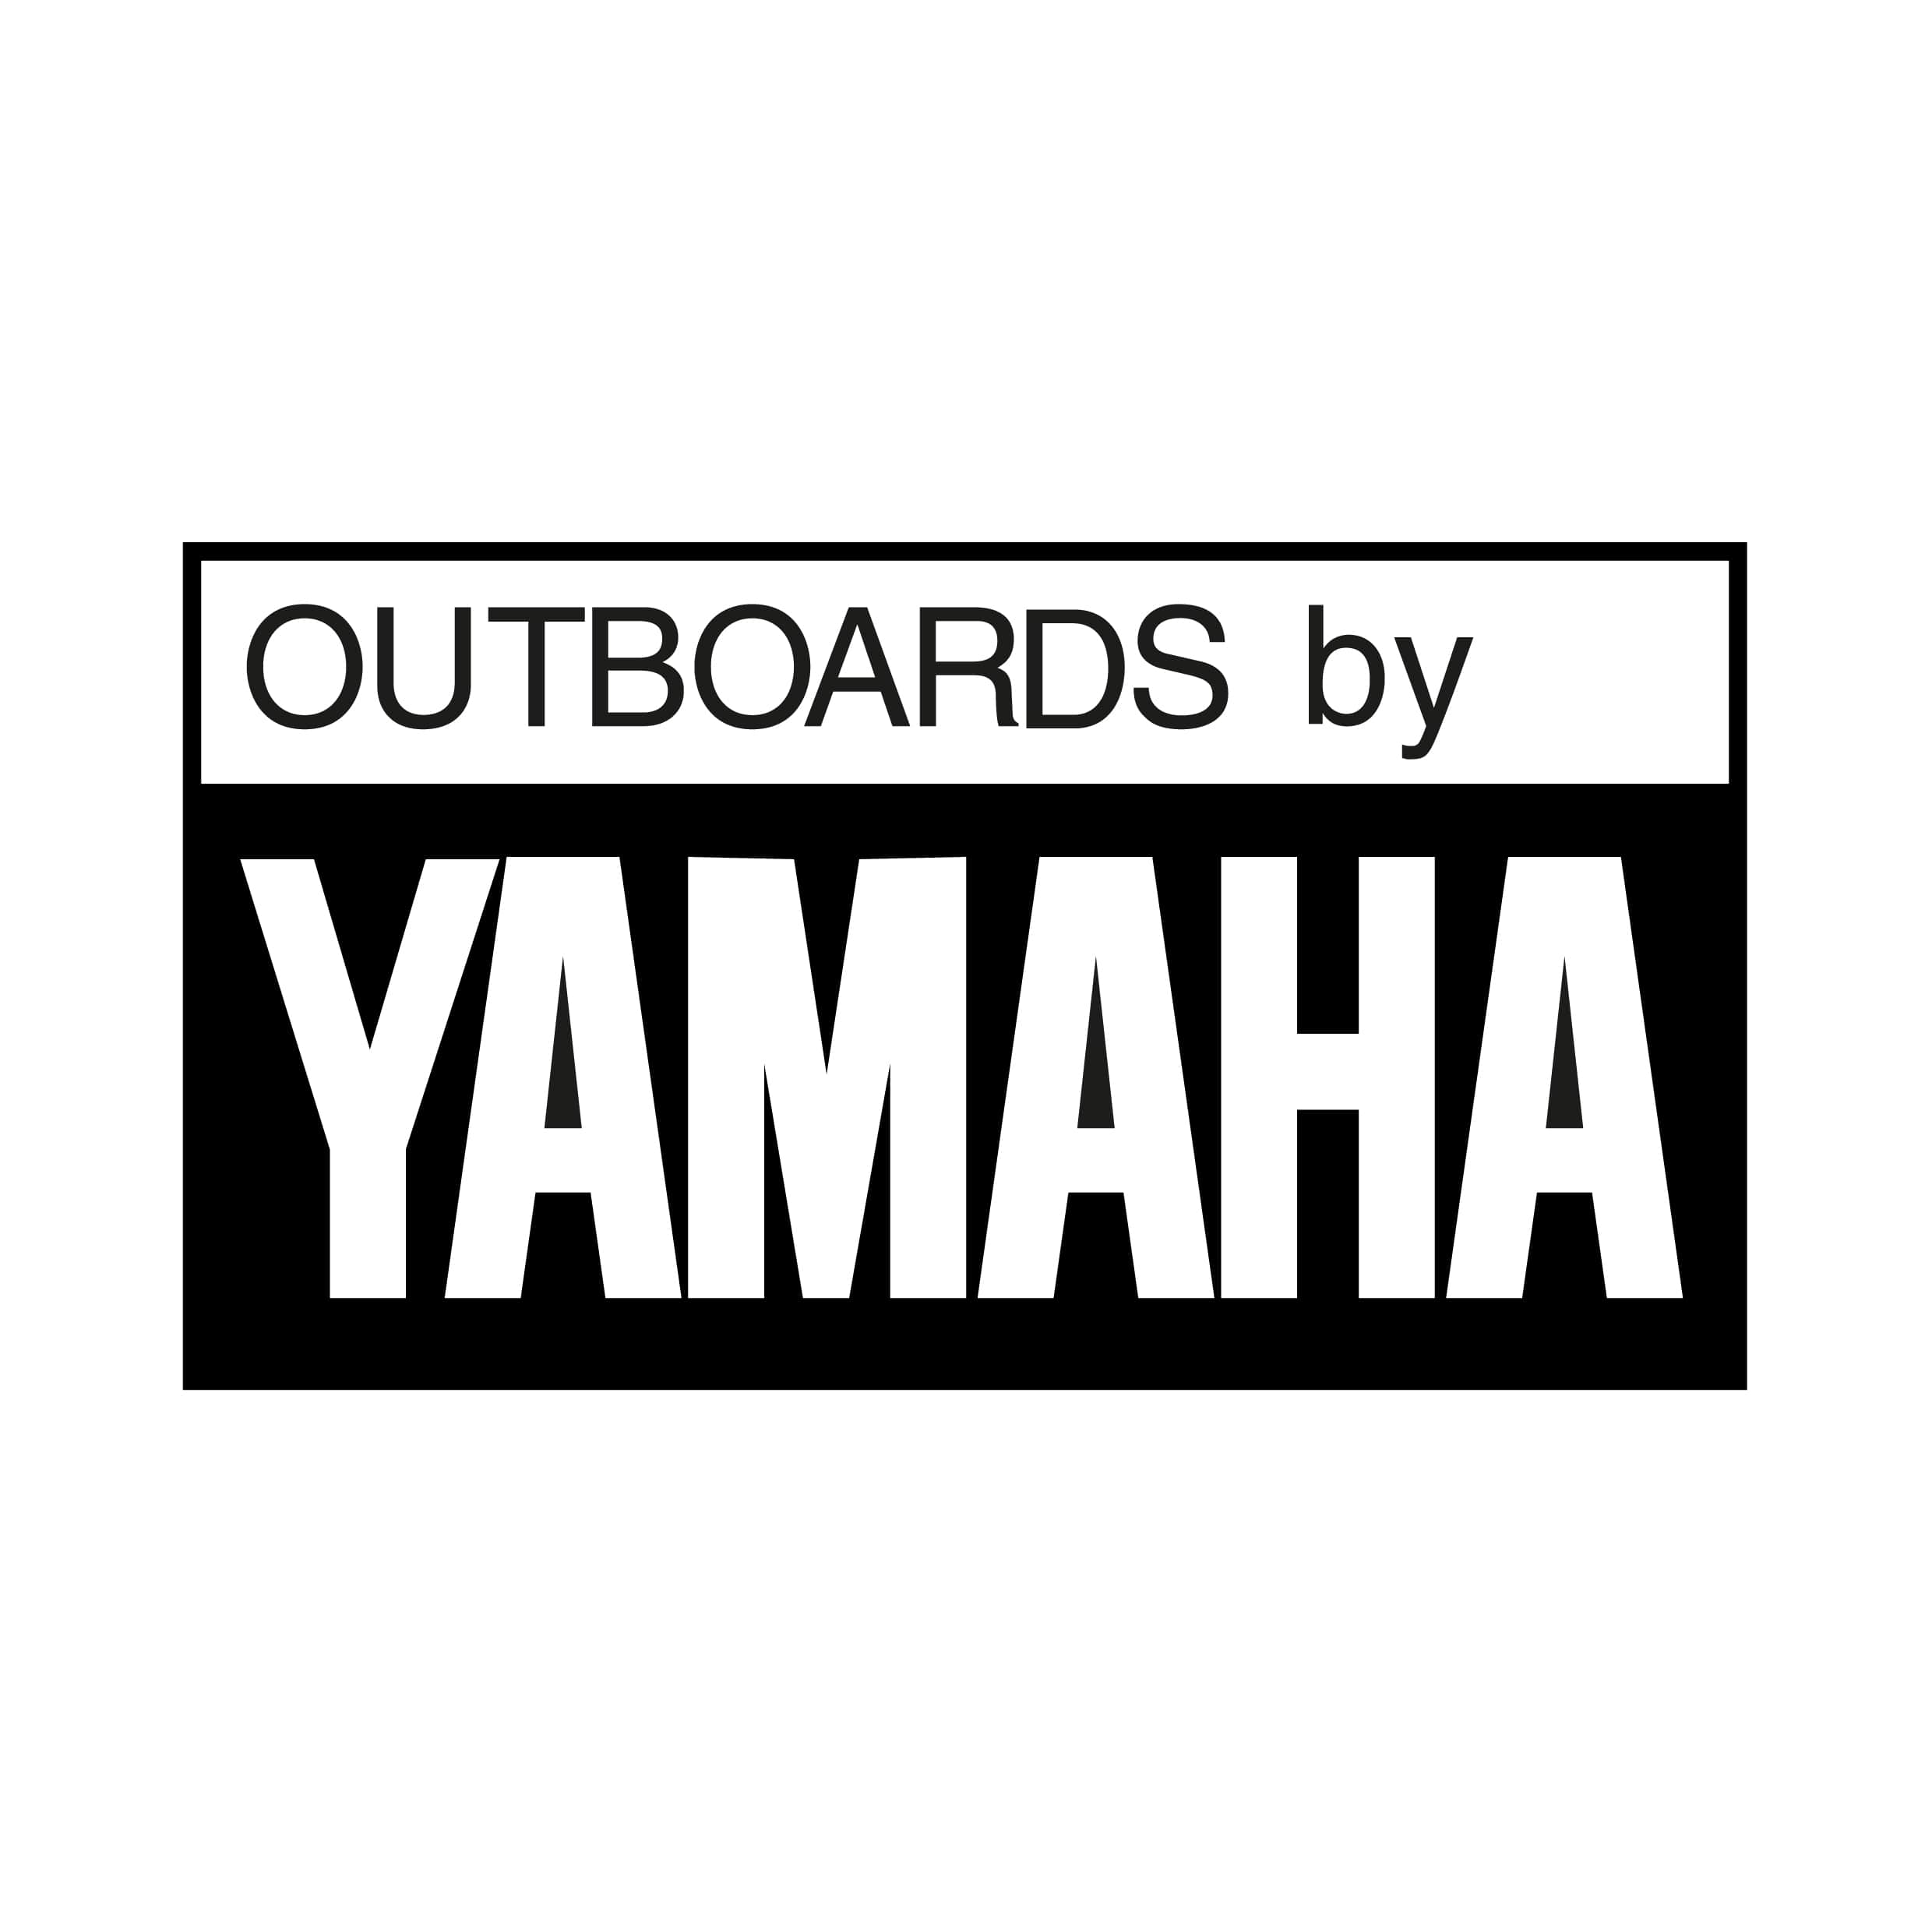 stickers-Yamaha-Outboards-ref2-autocollant-bateau-sticker-semi-rigide-moteur-hors-bord-zodiac-catamaran-autocollants-jet-ski-mer-voilier-logo-